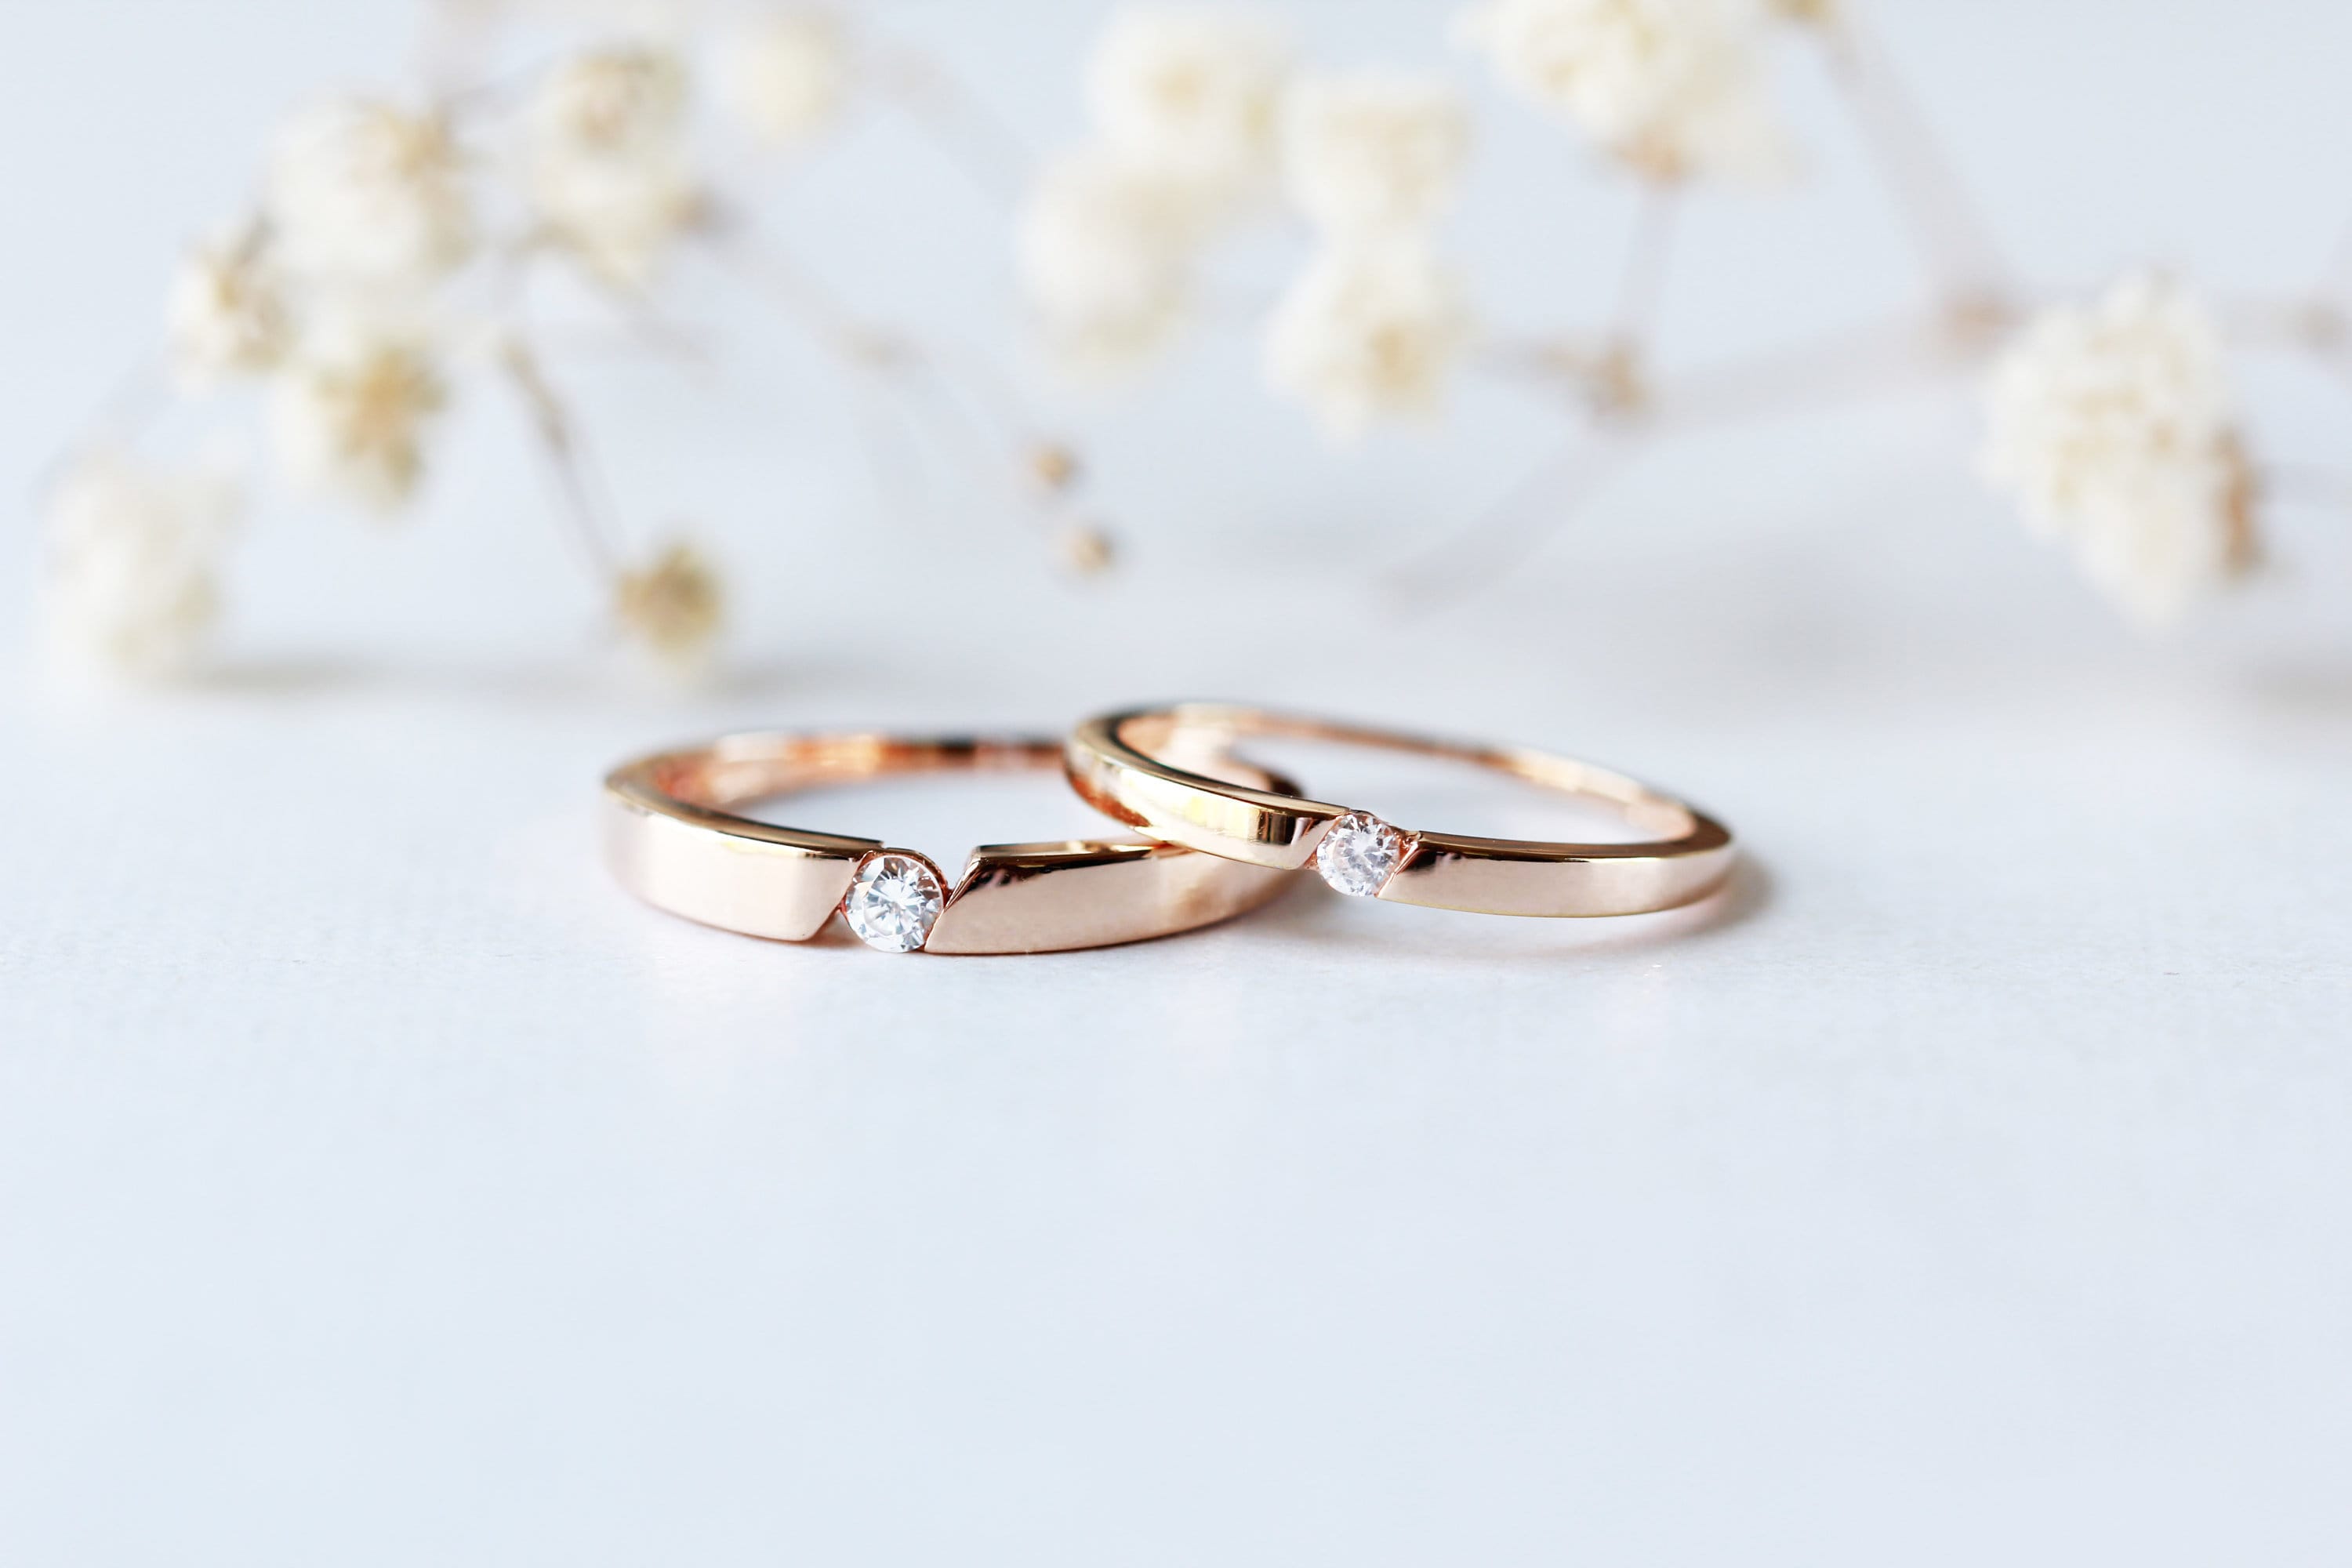 Couple Wedding Ring Set for Men & Women | D&P Malaysia